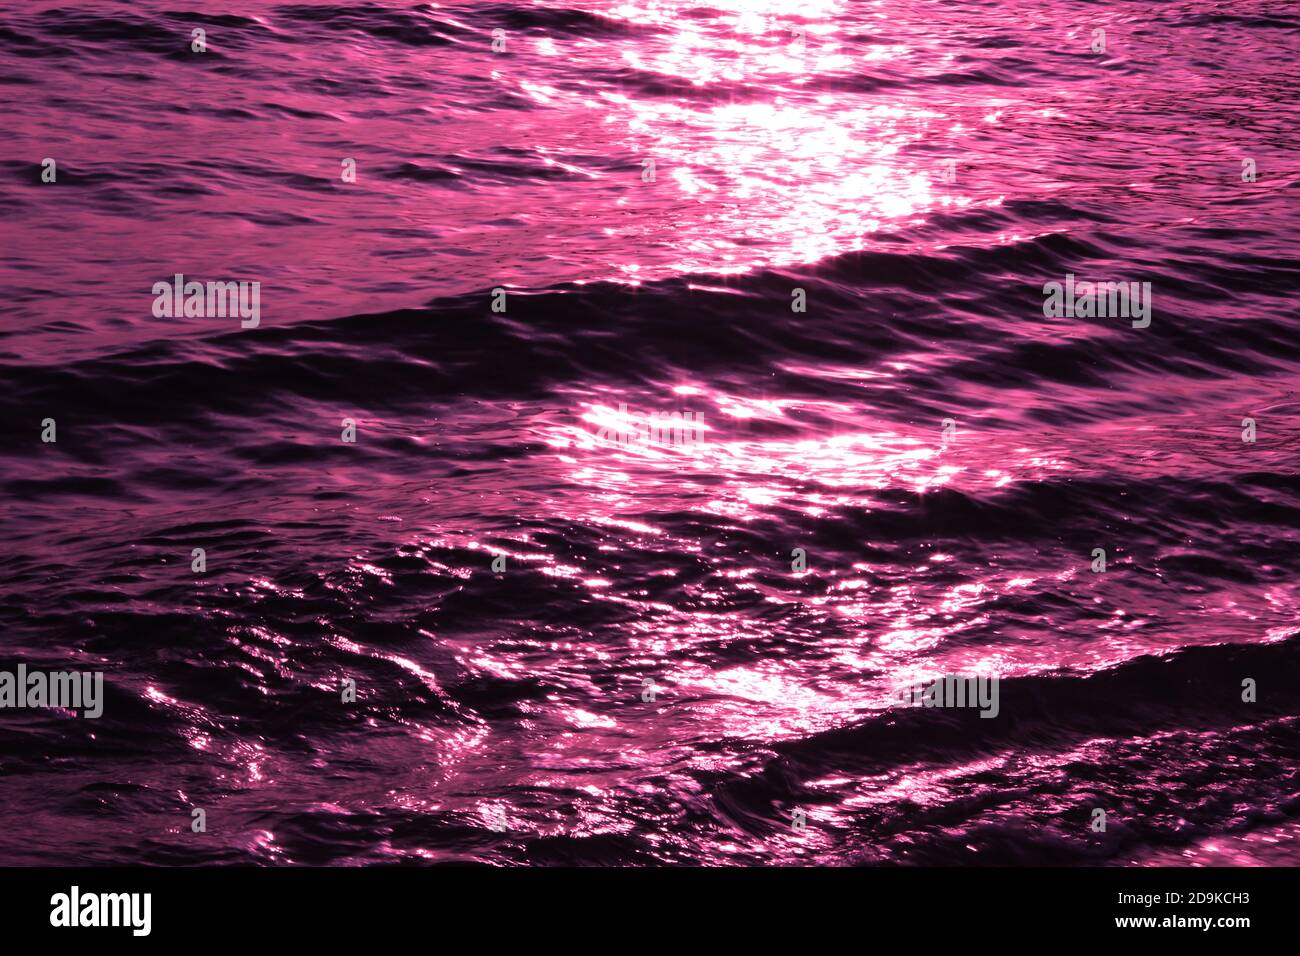 Magenta magical sea waves. Alien marvelous ocean. Beautiful image unreal surreal seascape. Stock Photo